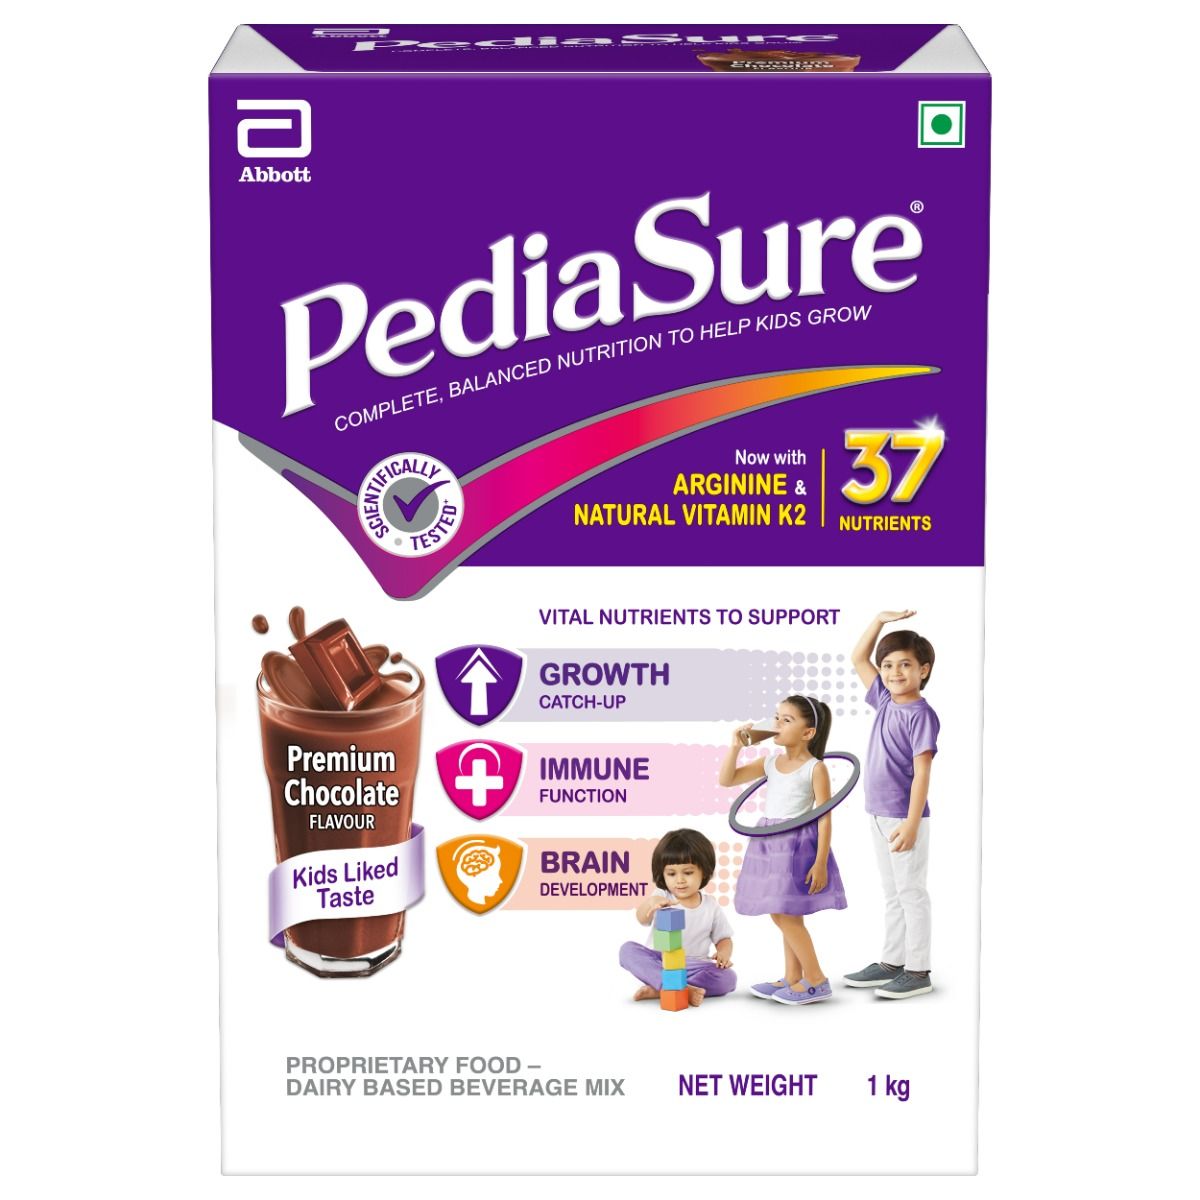 Buy Pediasure Complete, Balanced Nutrition Premium Chocolate Flavour Nutrition Drink Powder for Kids Growth, 1 kg Online